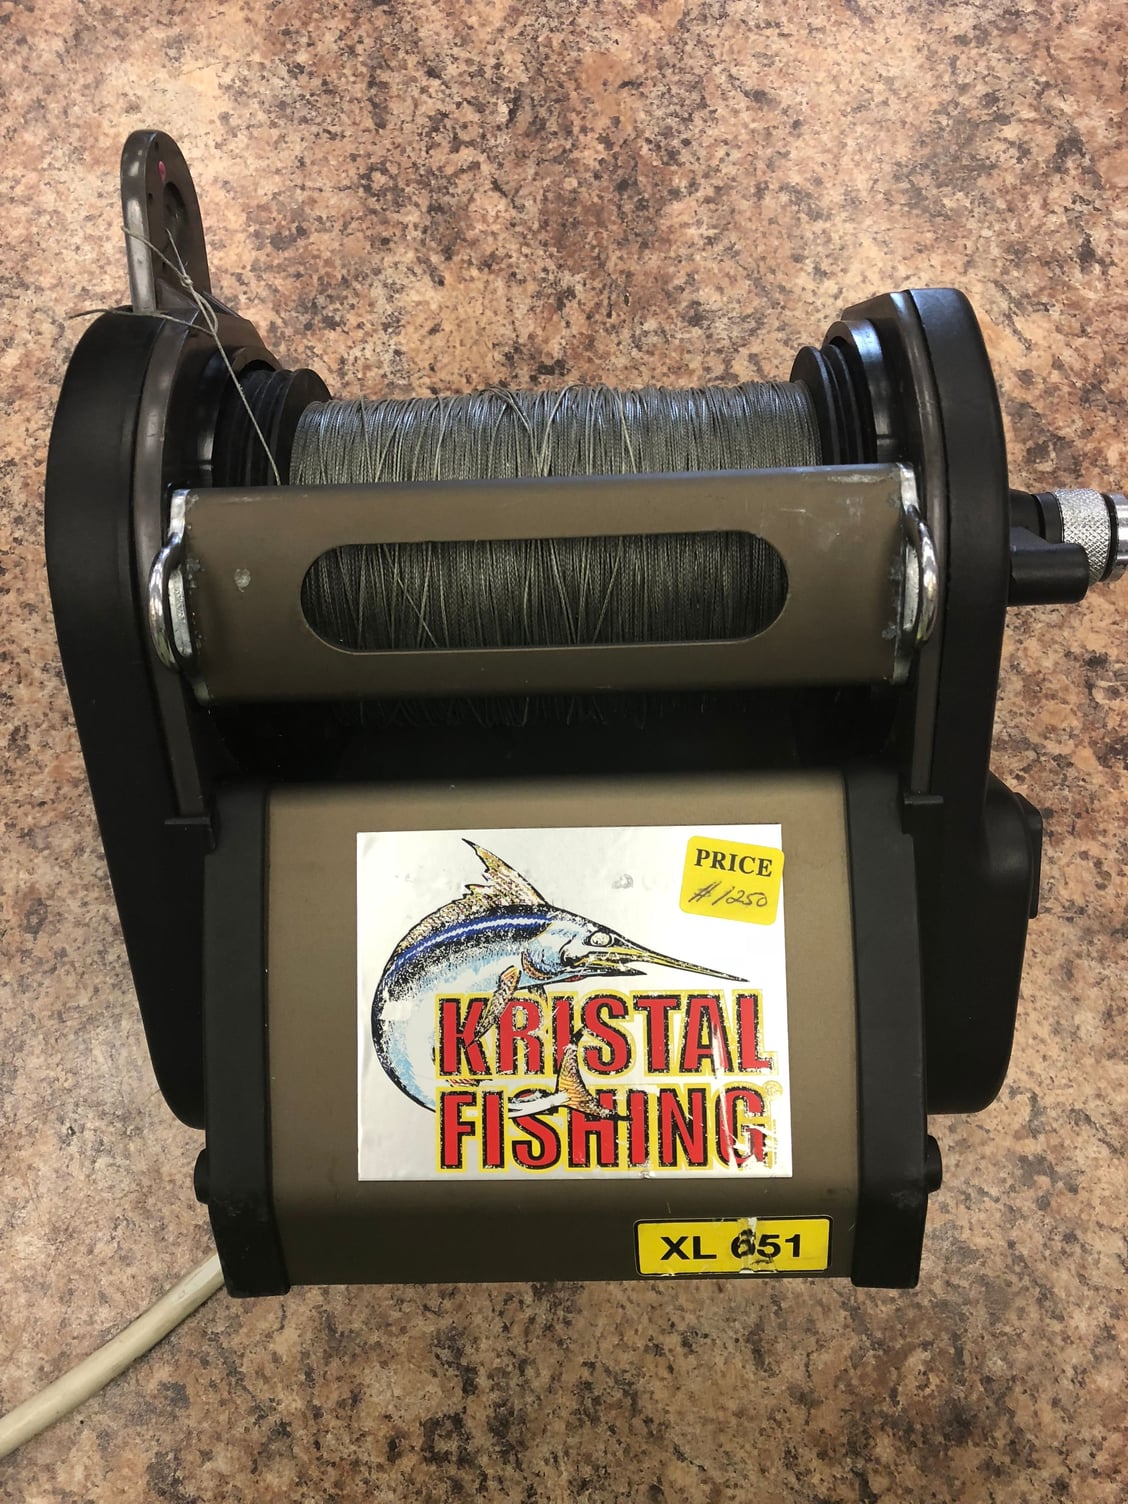 Kristal Fishing series 600, XL 651 electric reel $1250 - The Hull